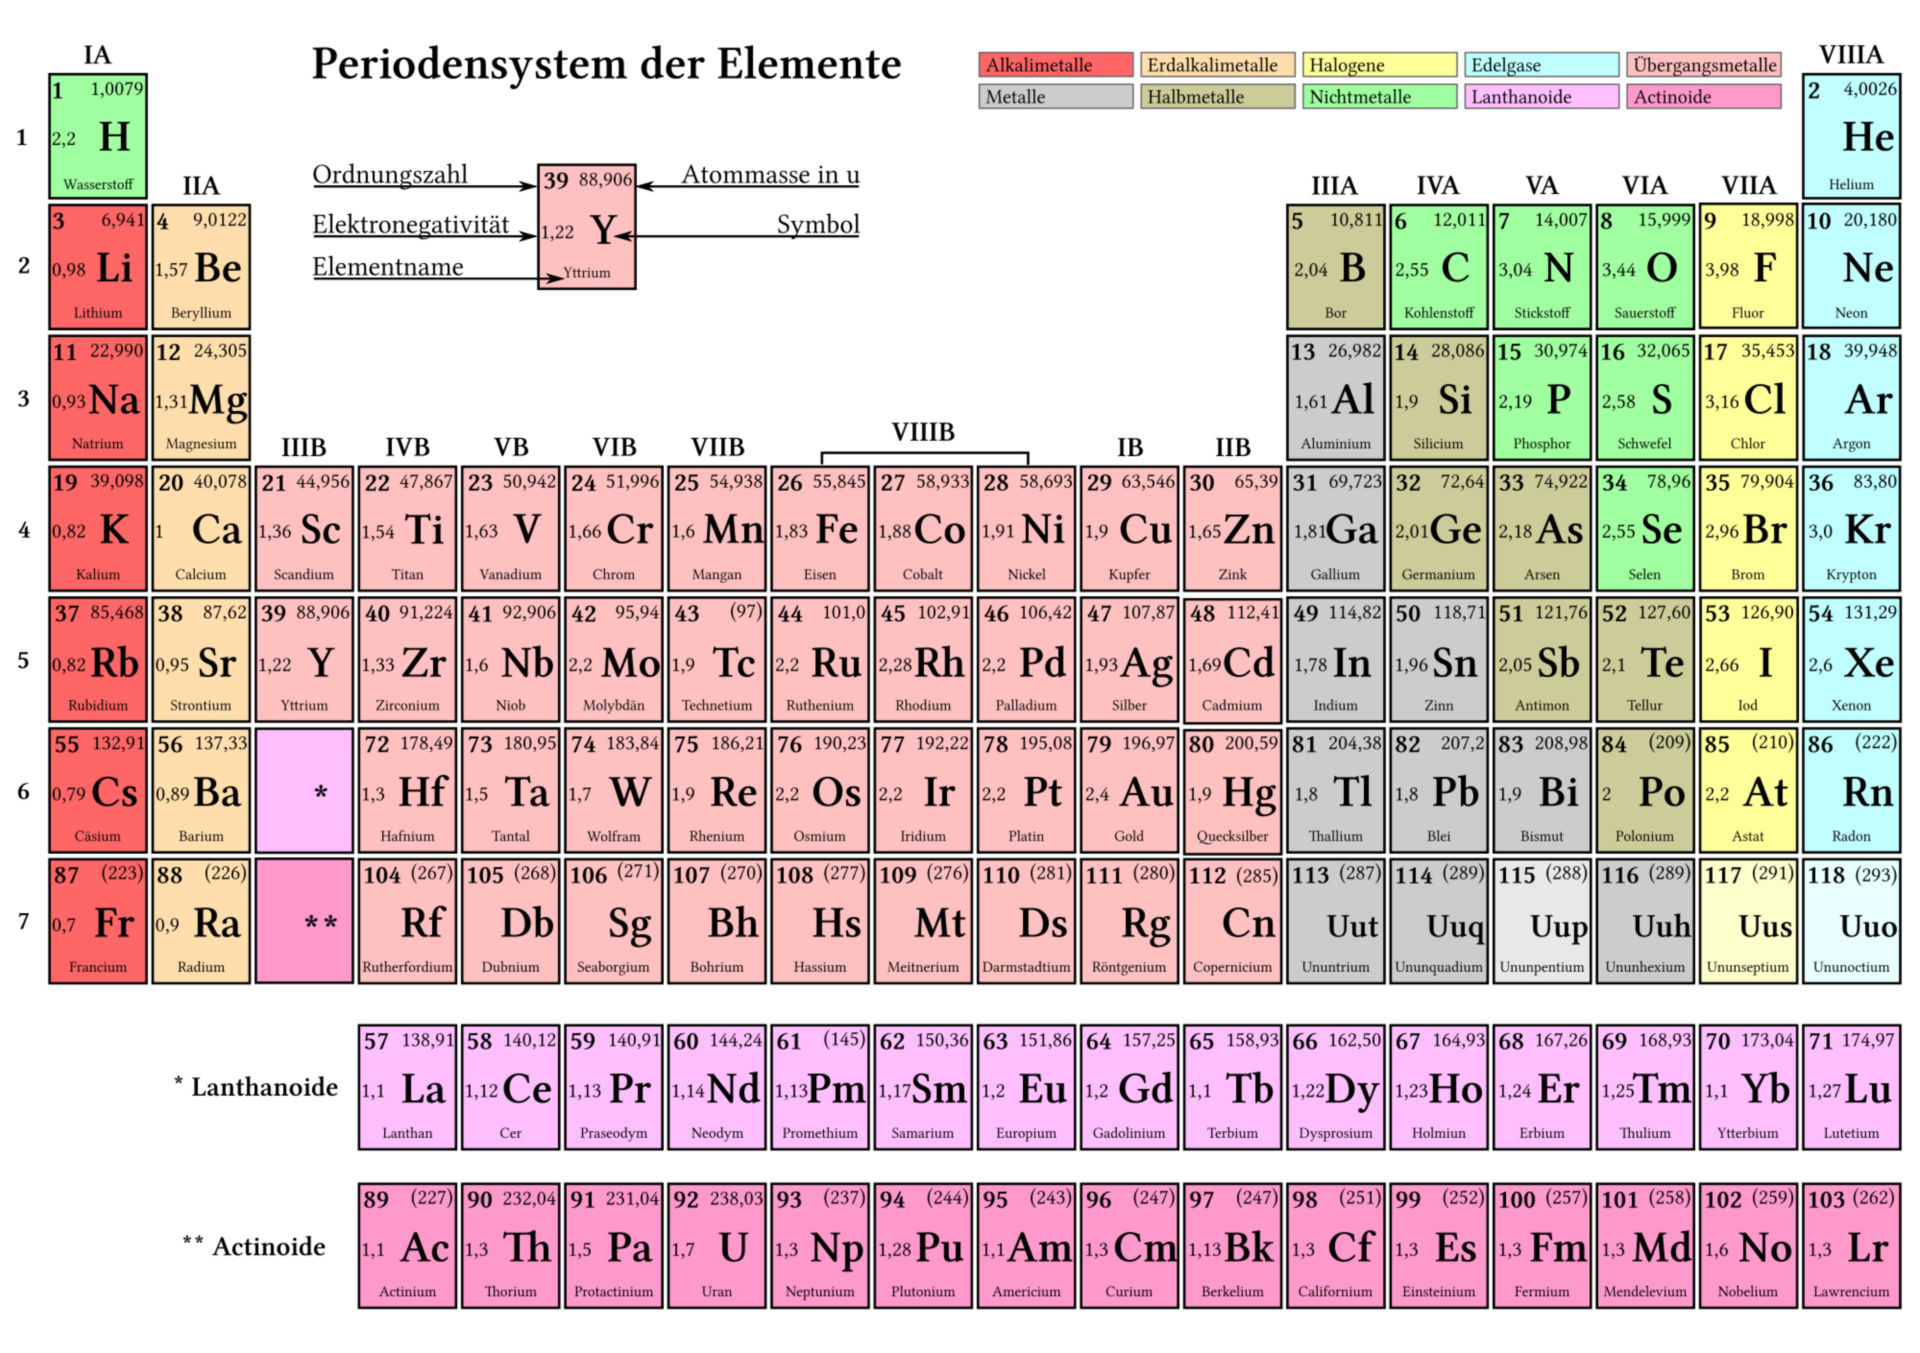 molar mass on periodic table